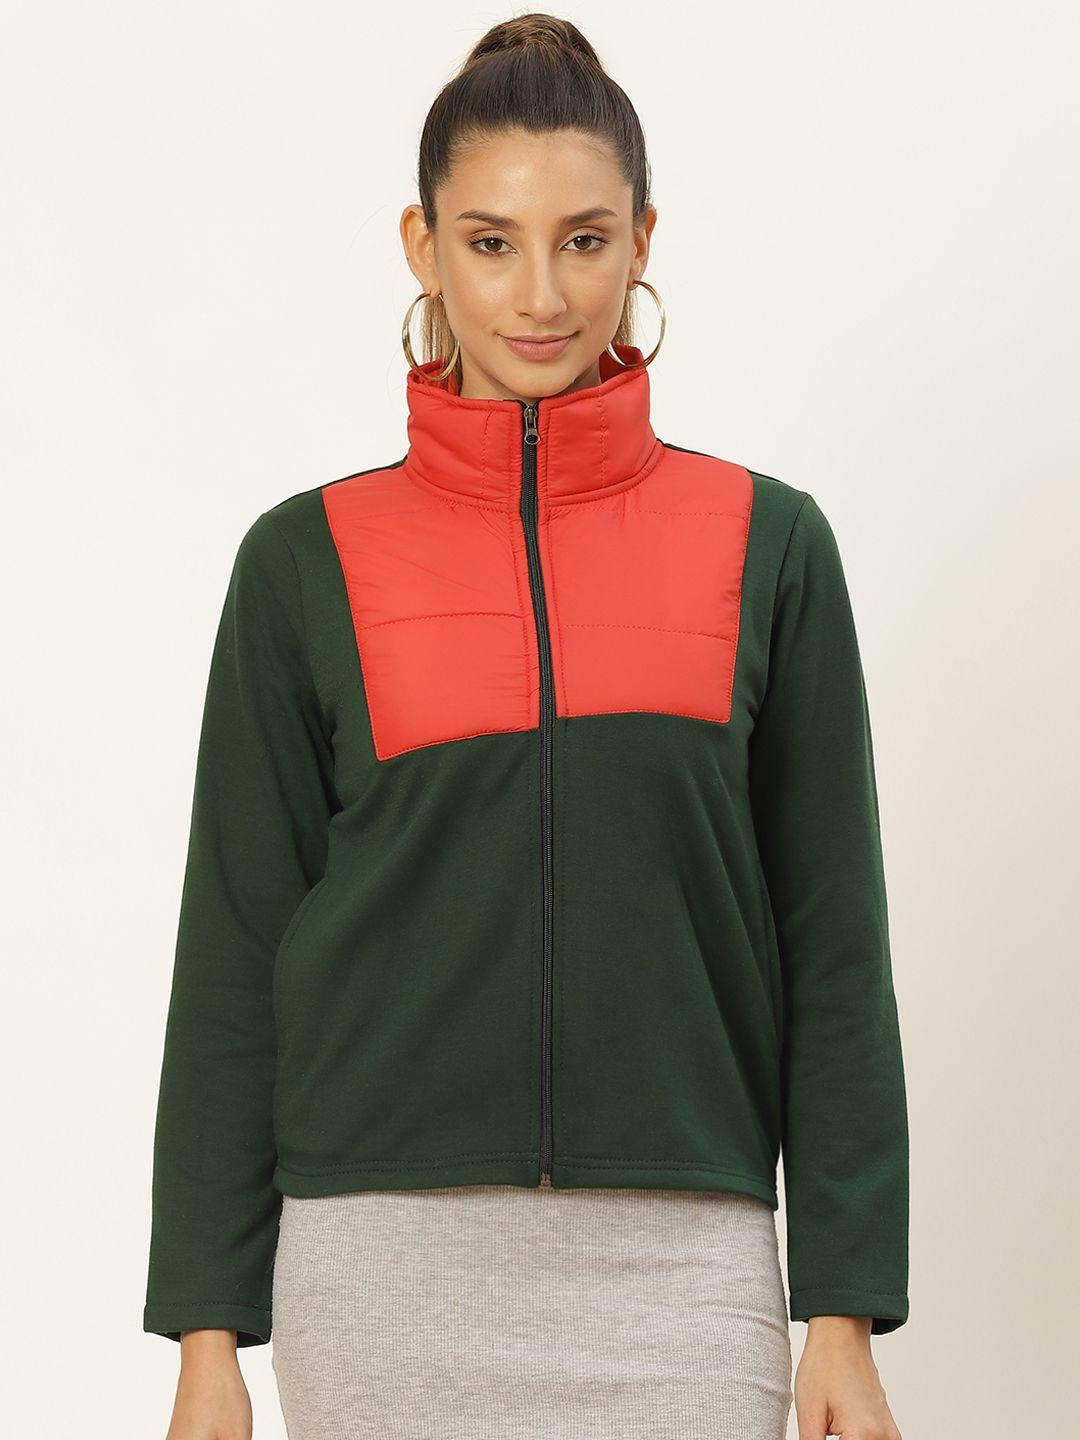 belle-fille-women-teal-green-&-red-colourblocked-fleece-lightweight-tailored-jacket